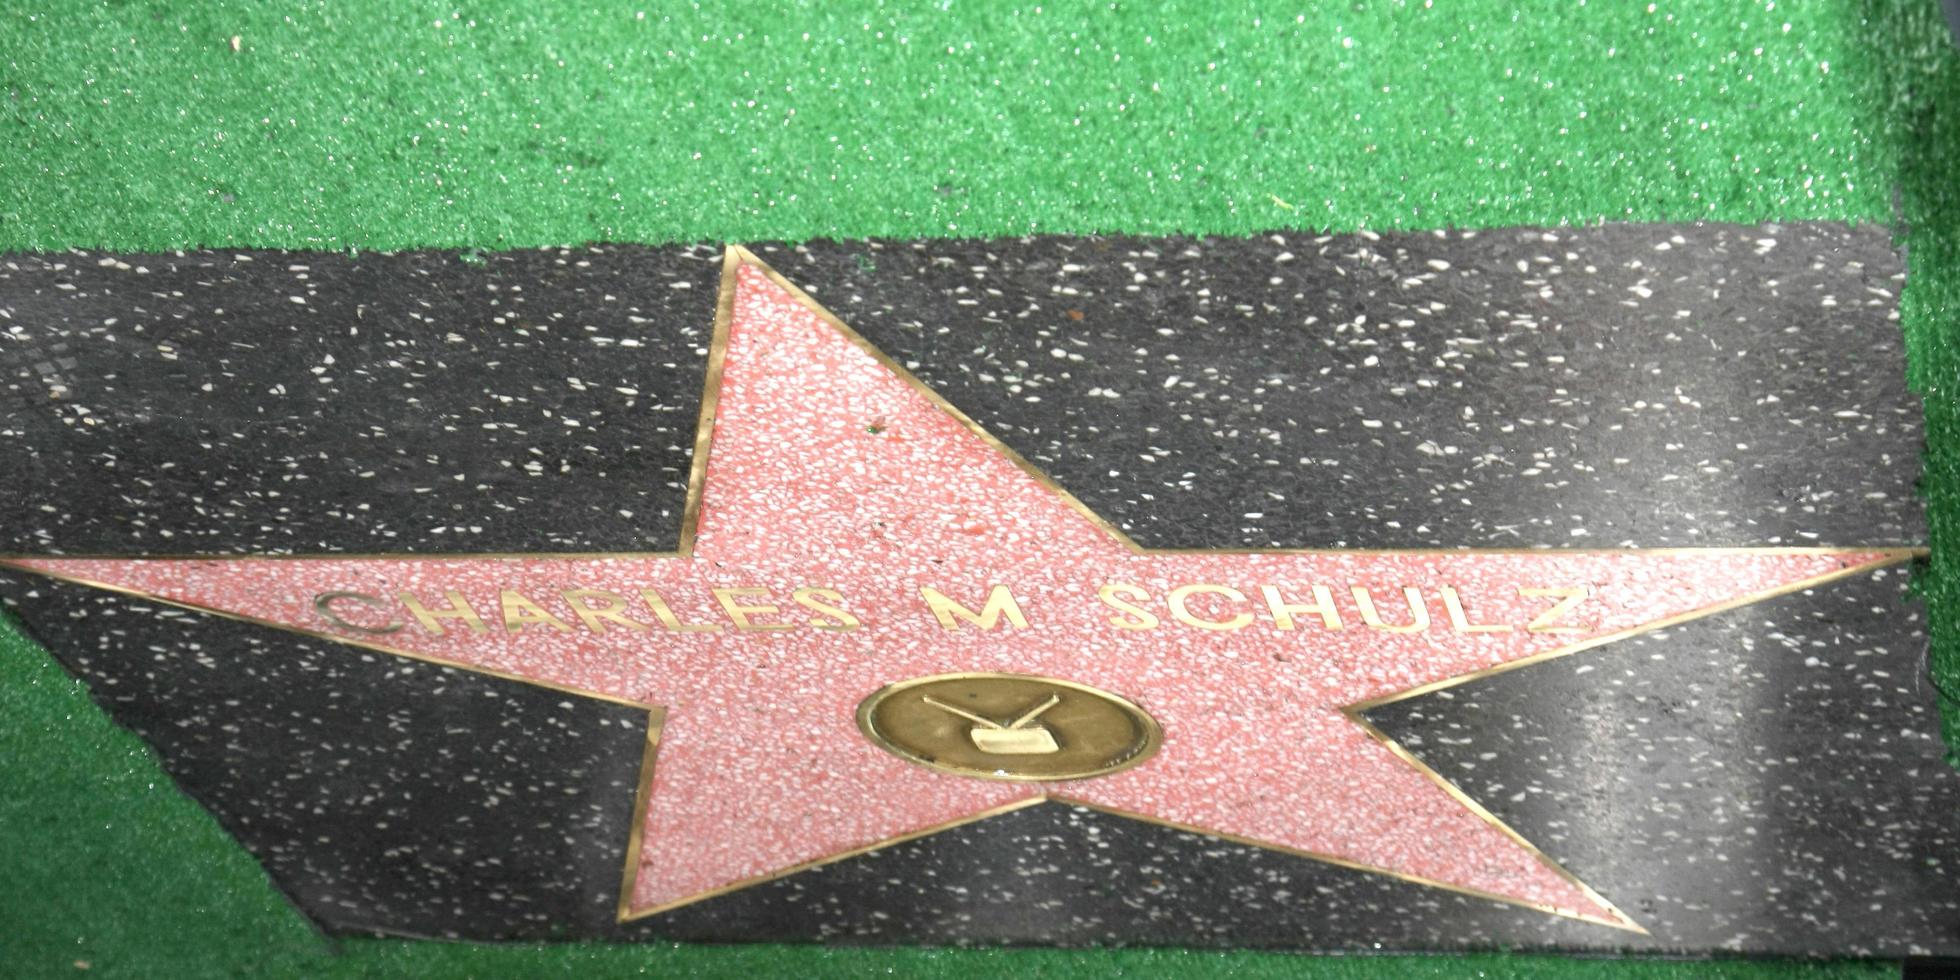 los engelen, nov 2 - Charles Schultz wof ster Bij de snoopy Hollywood wandelen van roem ceremonie Bij de Hollywood wandelen van roem Aan november 2, 2015 in los engelen, ca foto